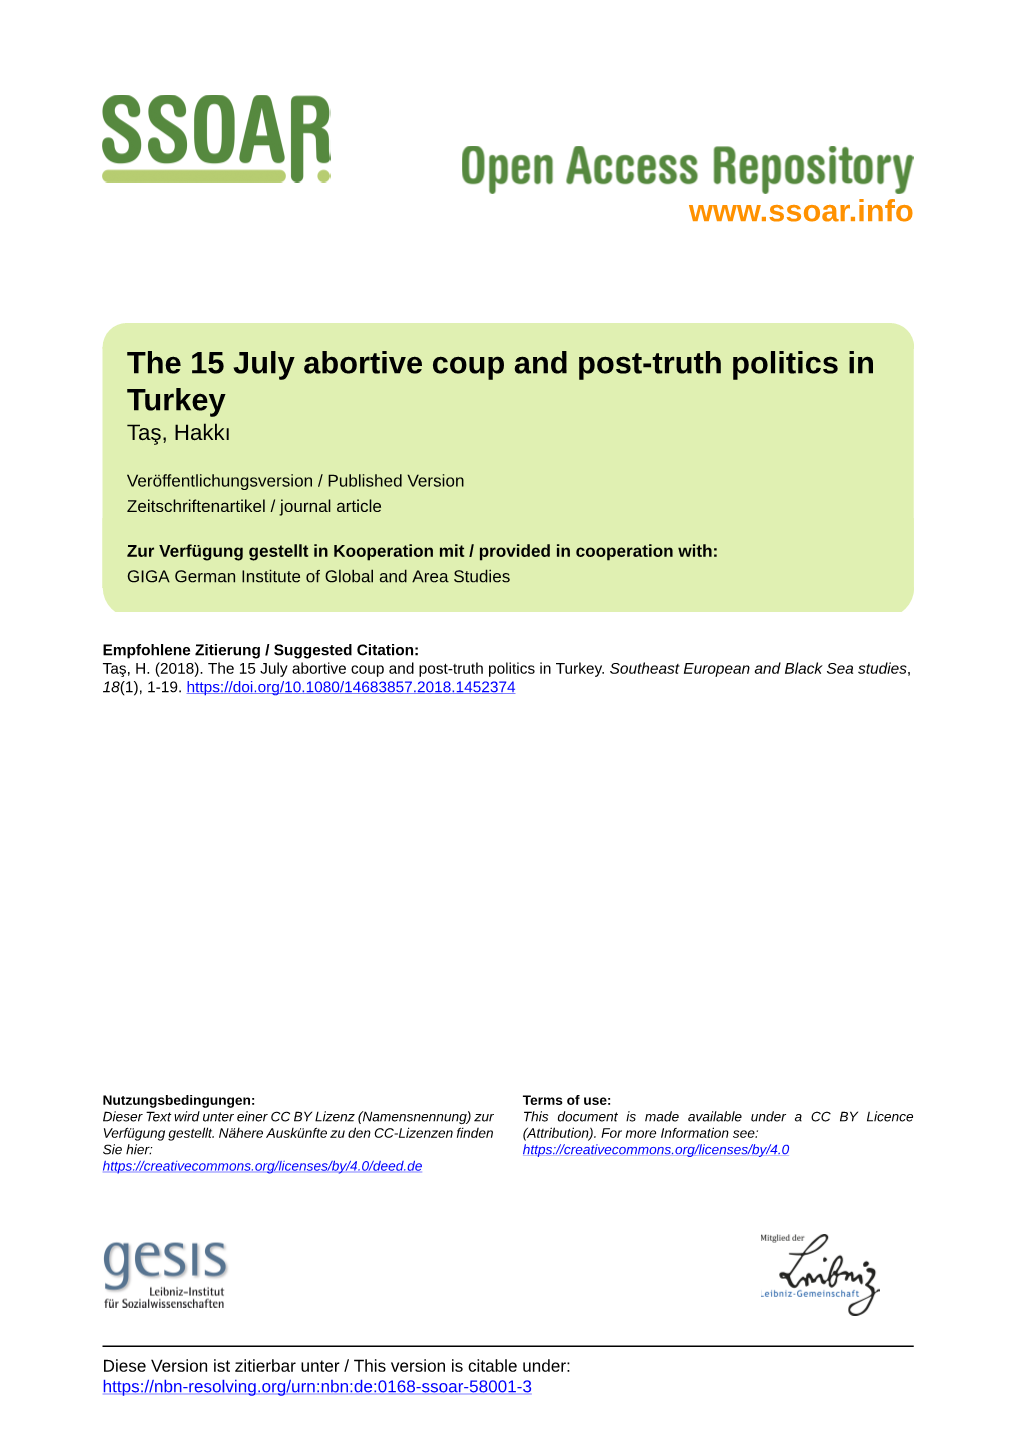 The 15 July Abortive Coup and Post-Truth Politics in Turkey Taş, Hakkı